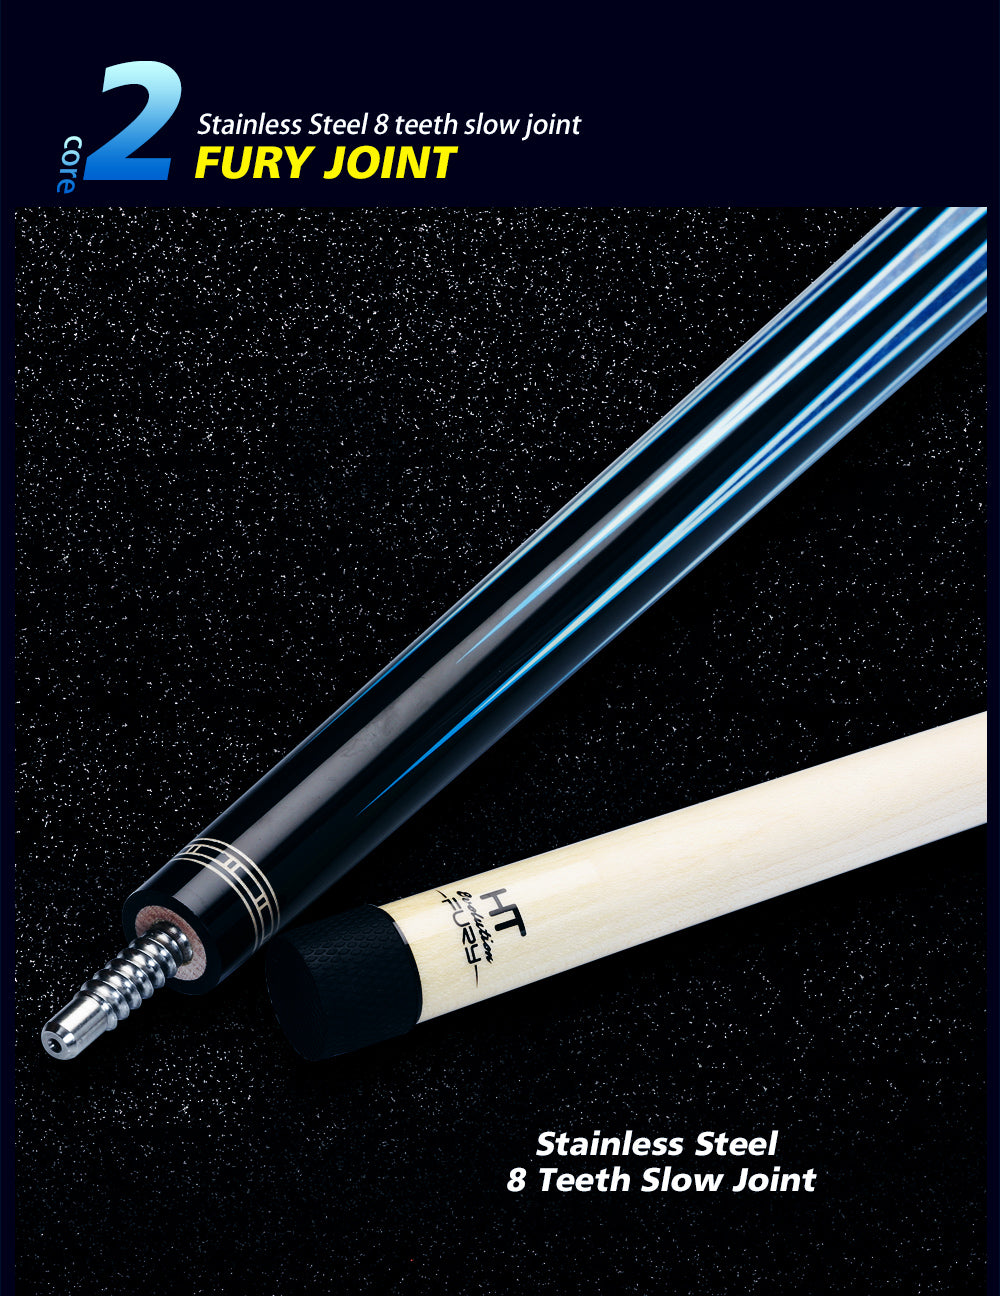 FURY Biiliard CL 2-6 Maple Billard Pool Cue Stick Kit 13mm Tiger Tip Professional Maple HTO Shaft